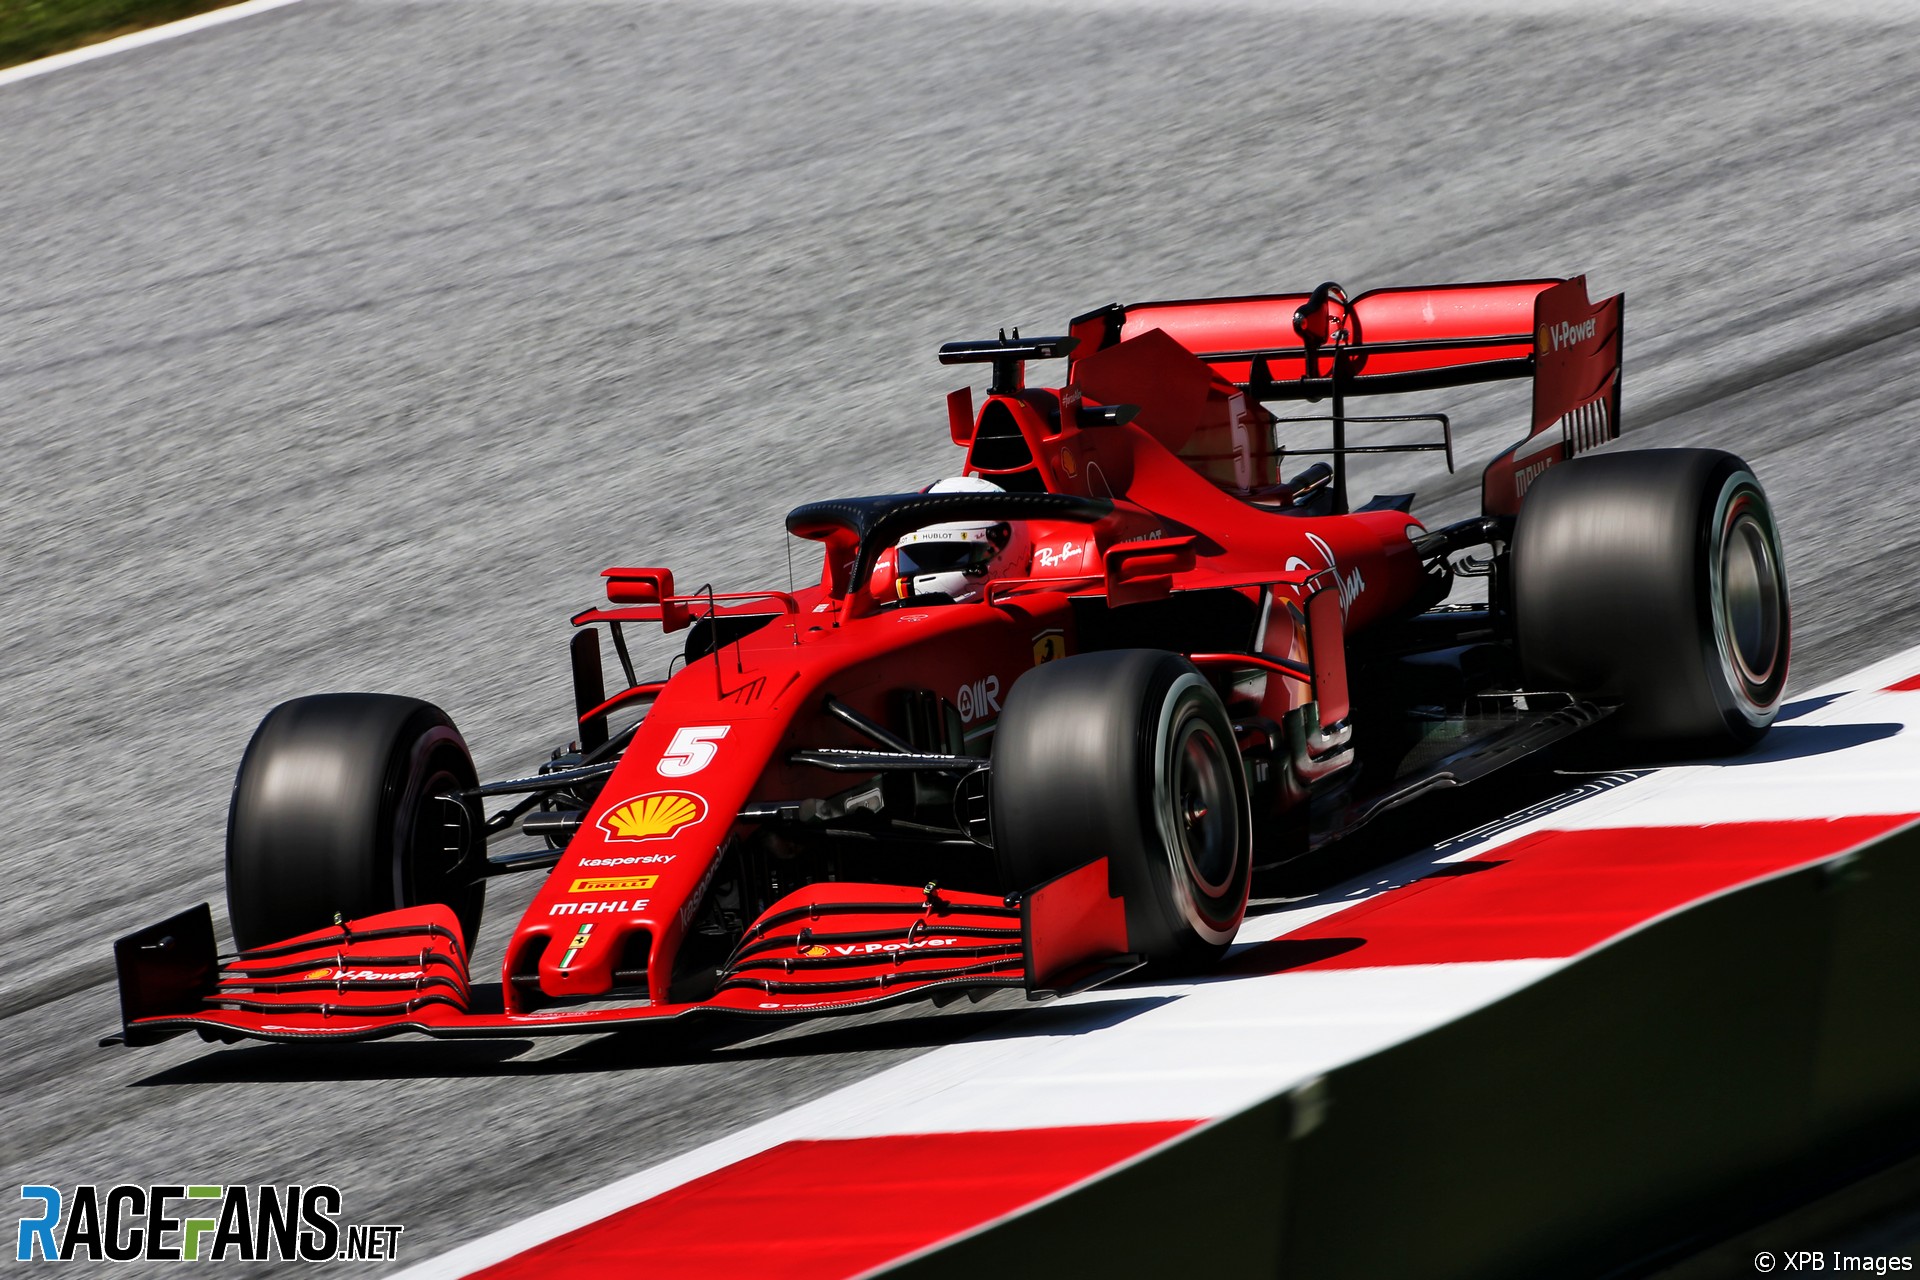 Make an effort Kenya Descriptive Vettel: Improved Ferrari felt "like a different car" · RaceFans